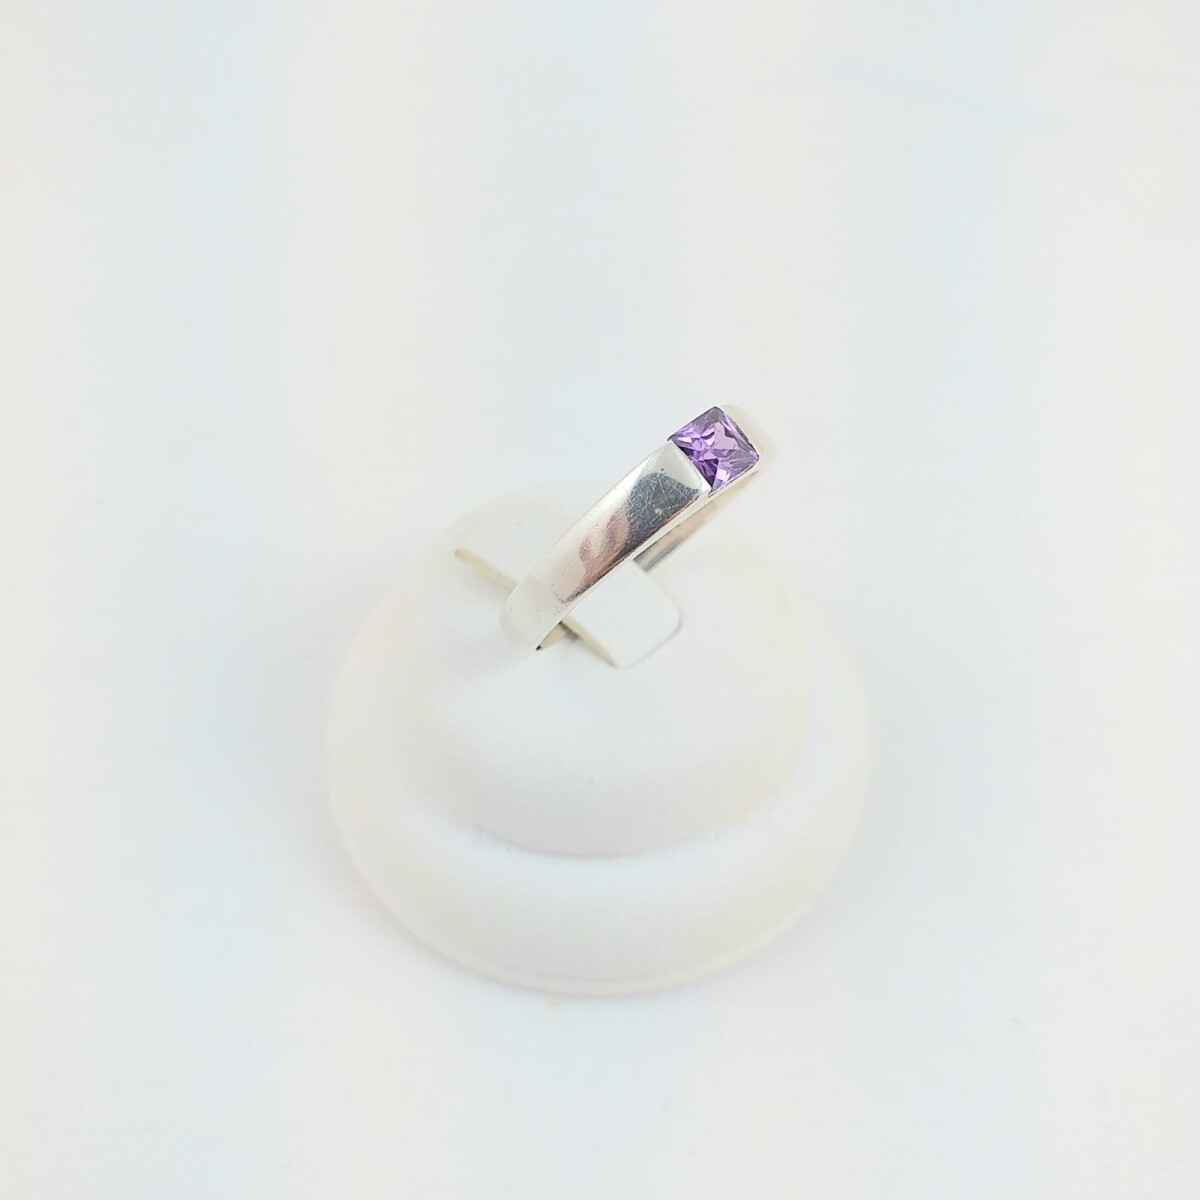 Anillo de plata 925, circonia violeta cuadrada engarzada, ancho 4mm, diámetro interno 18mm #16. 